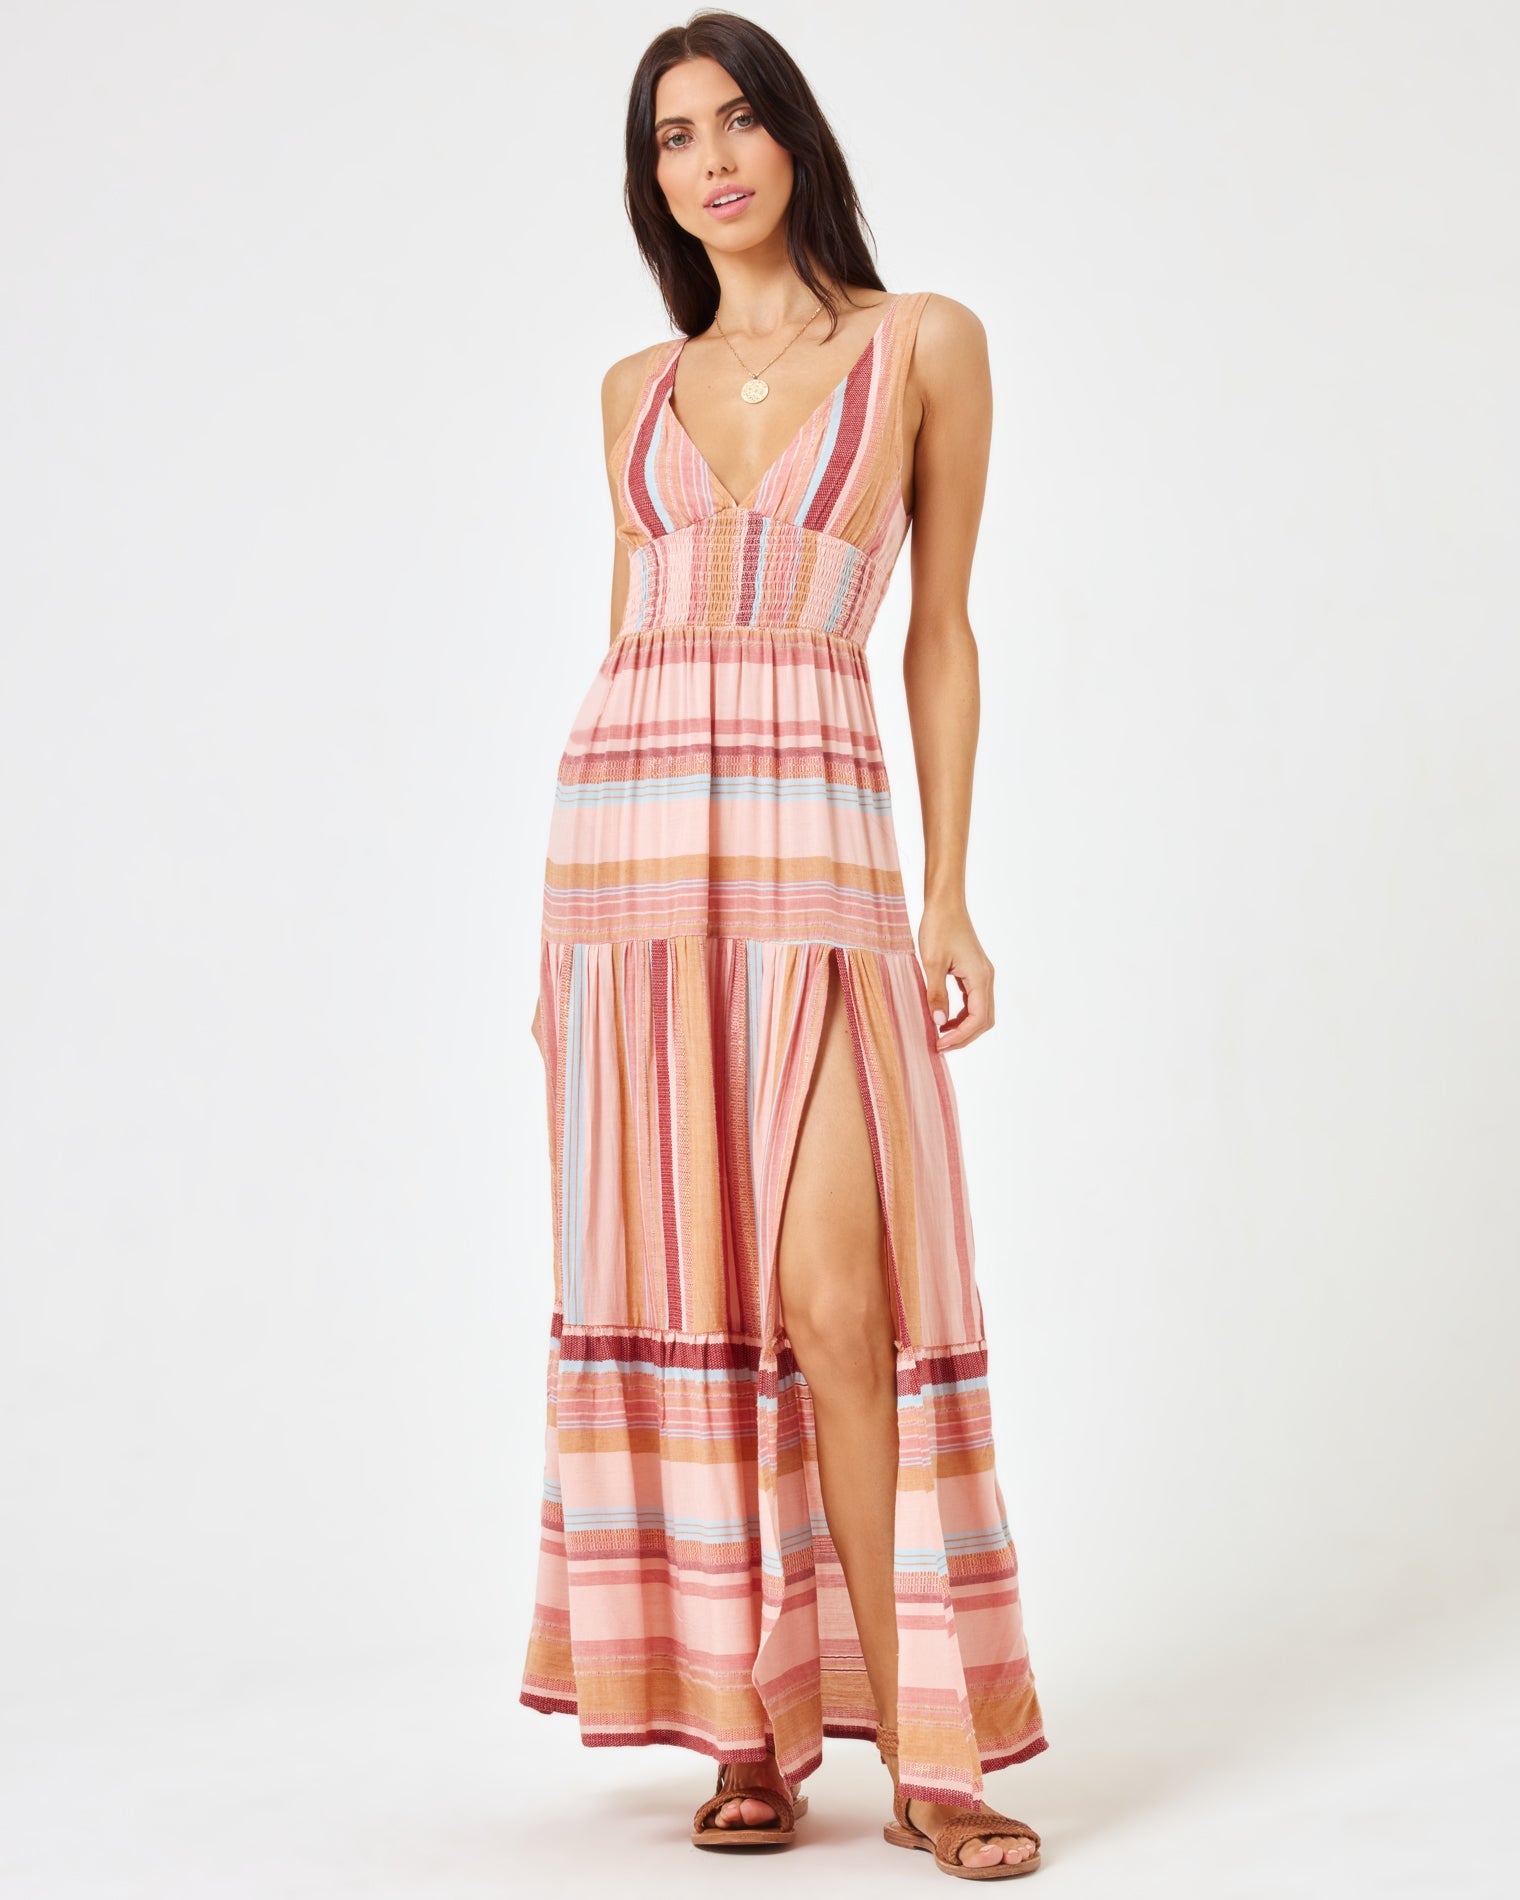 Stripe Lilikoi Dress Santa Monica Stripe | Model: Diana (size: S)